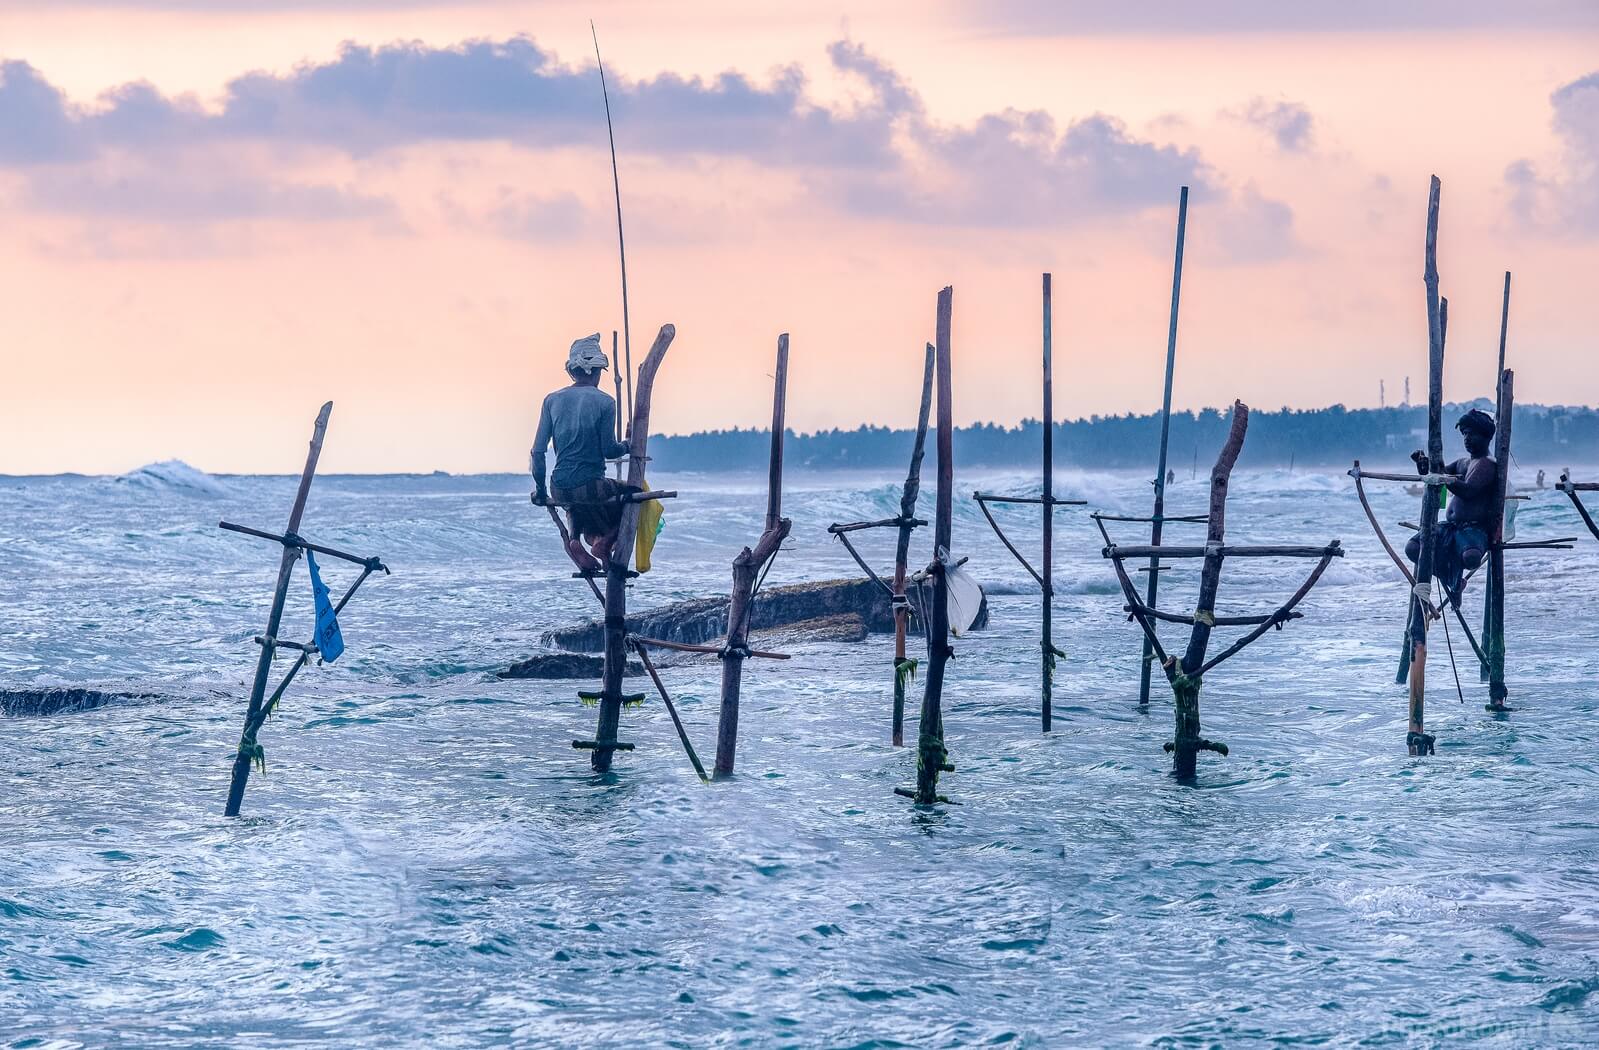 Image of Stilt fishing (Koggala) by Anas Qarman